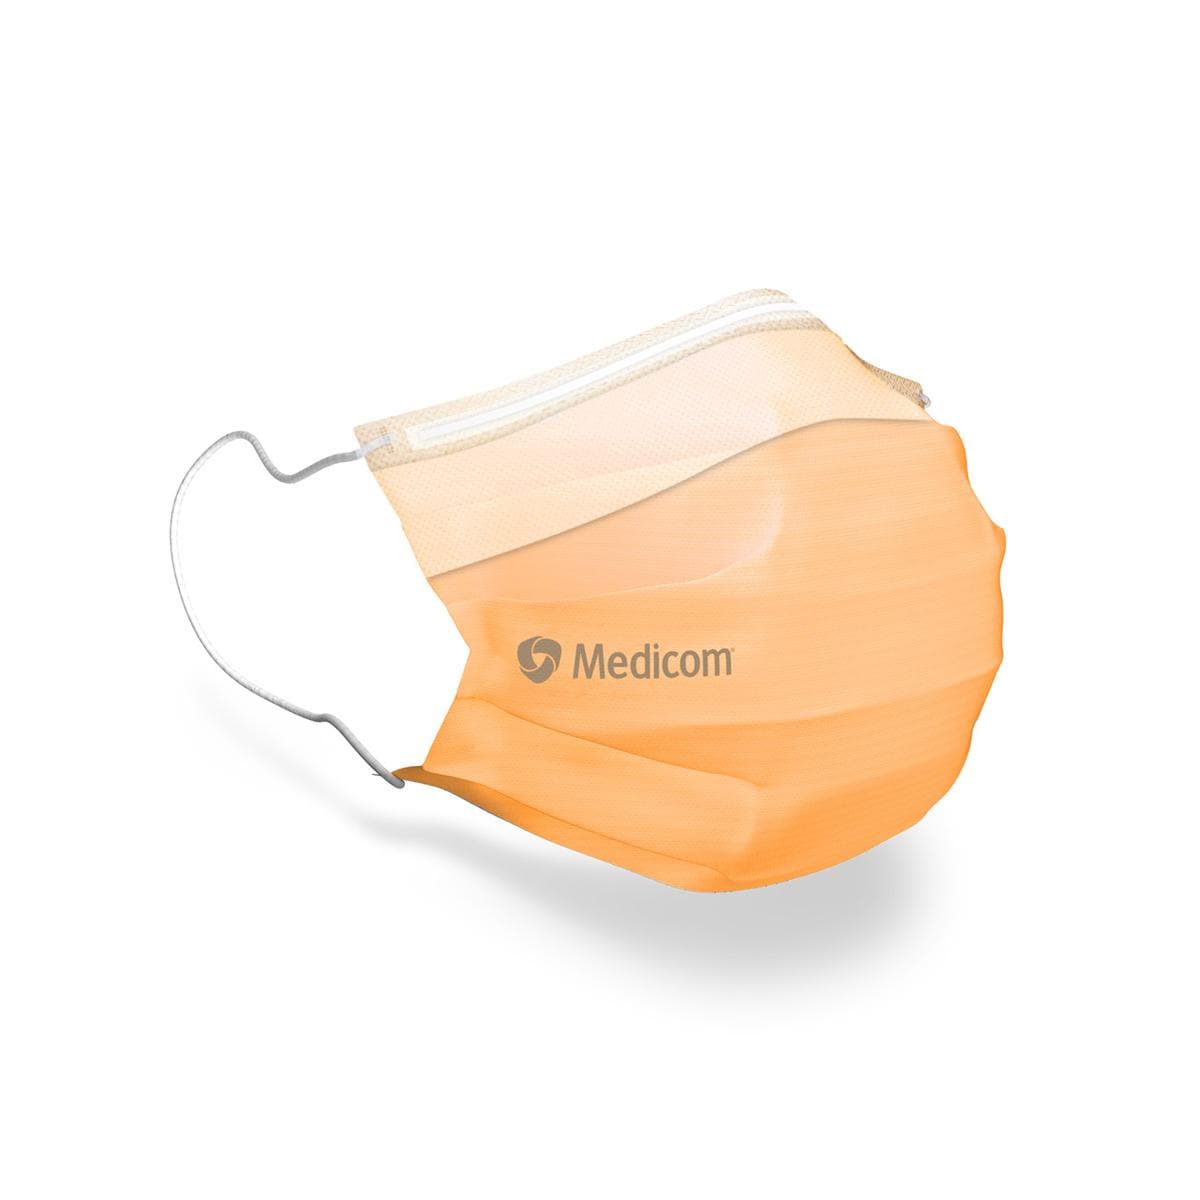 Mondmasker SafeMask SofSkin fog-free earloop Type IIR - Oranje - 50 stuks